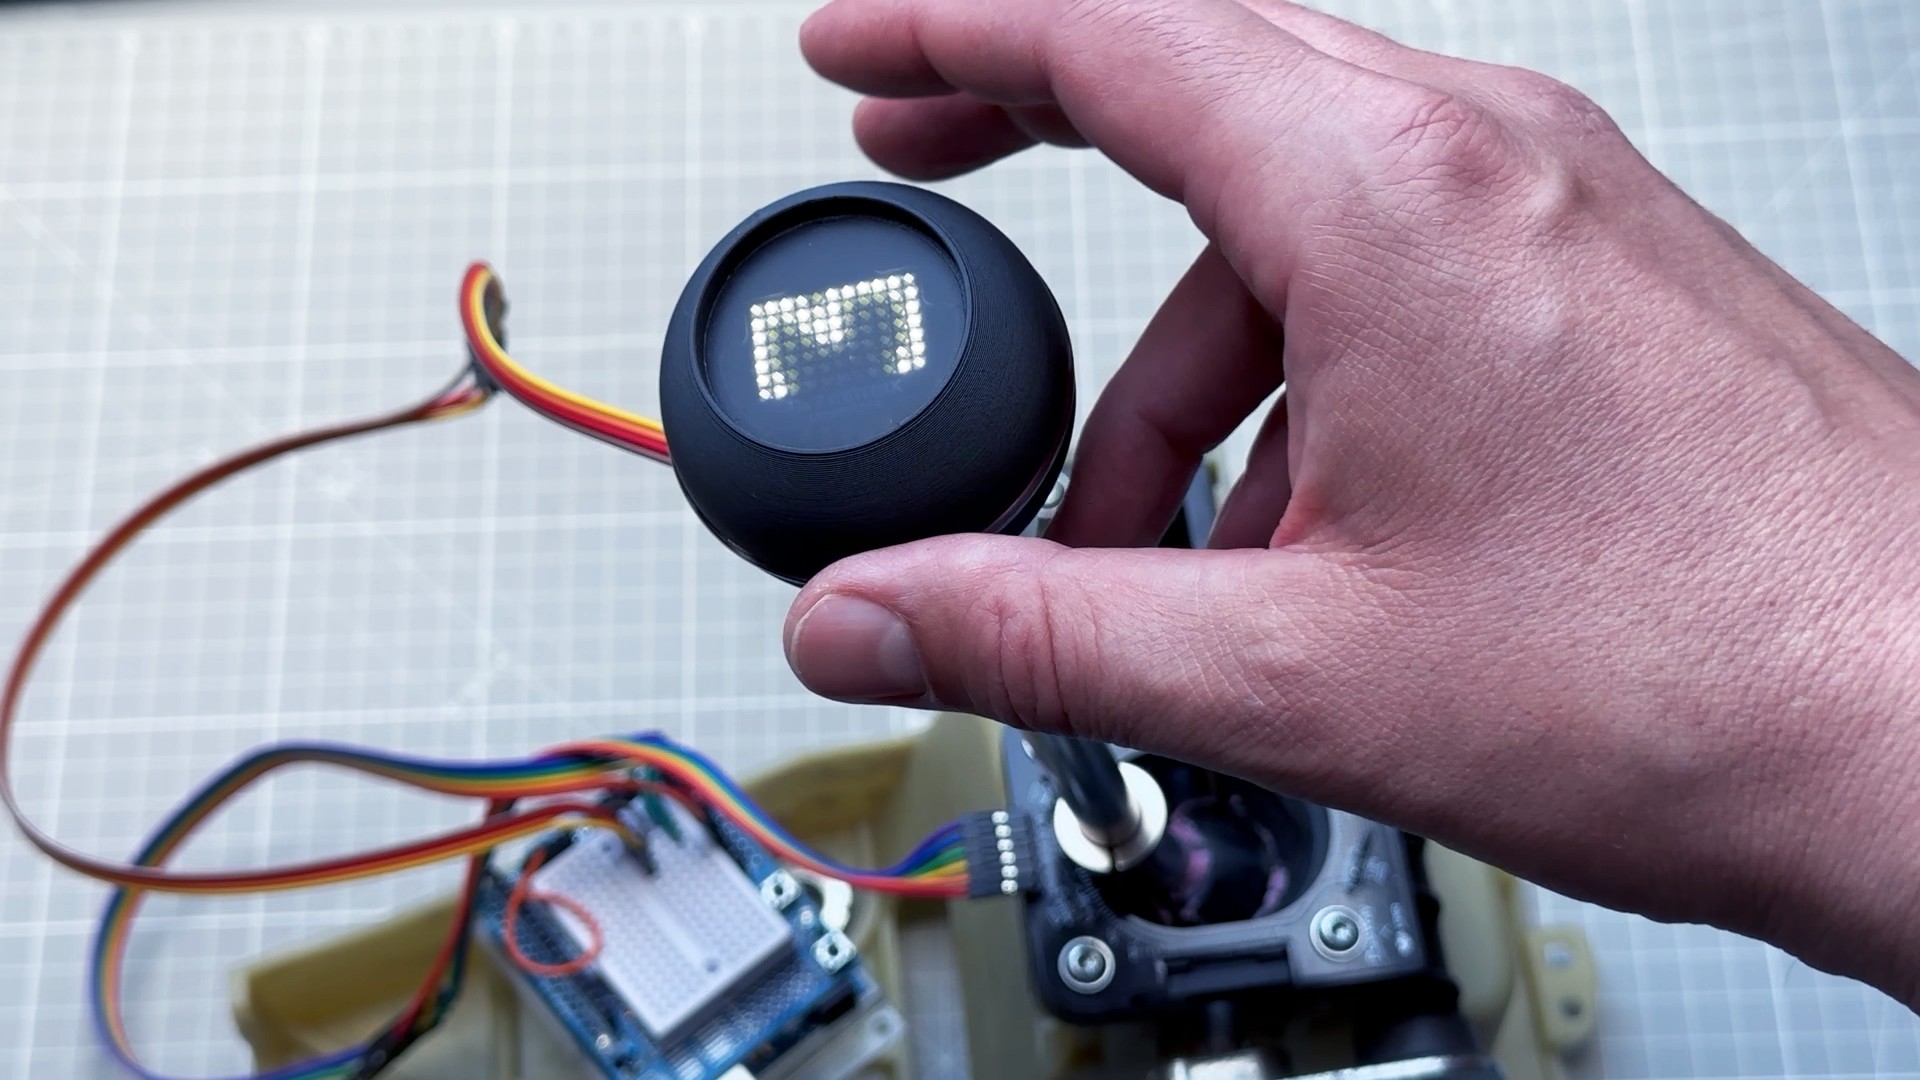 DIY shift knob gets a nice integrated LED gear indicator